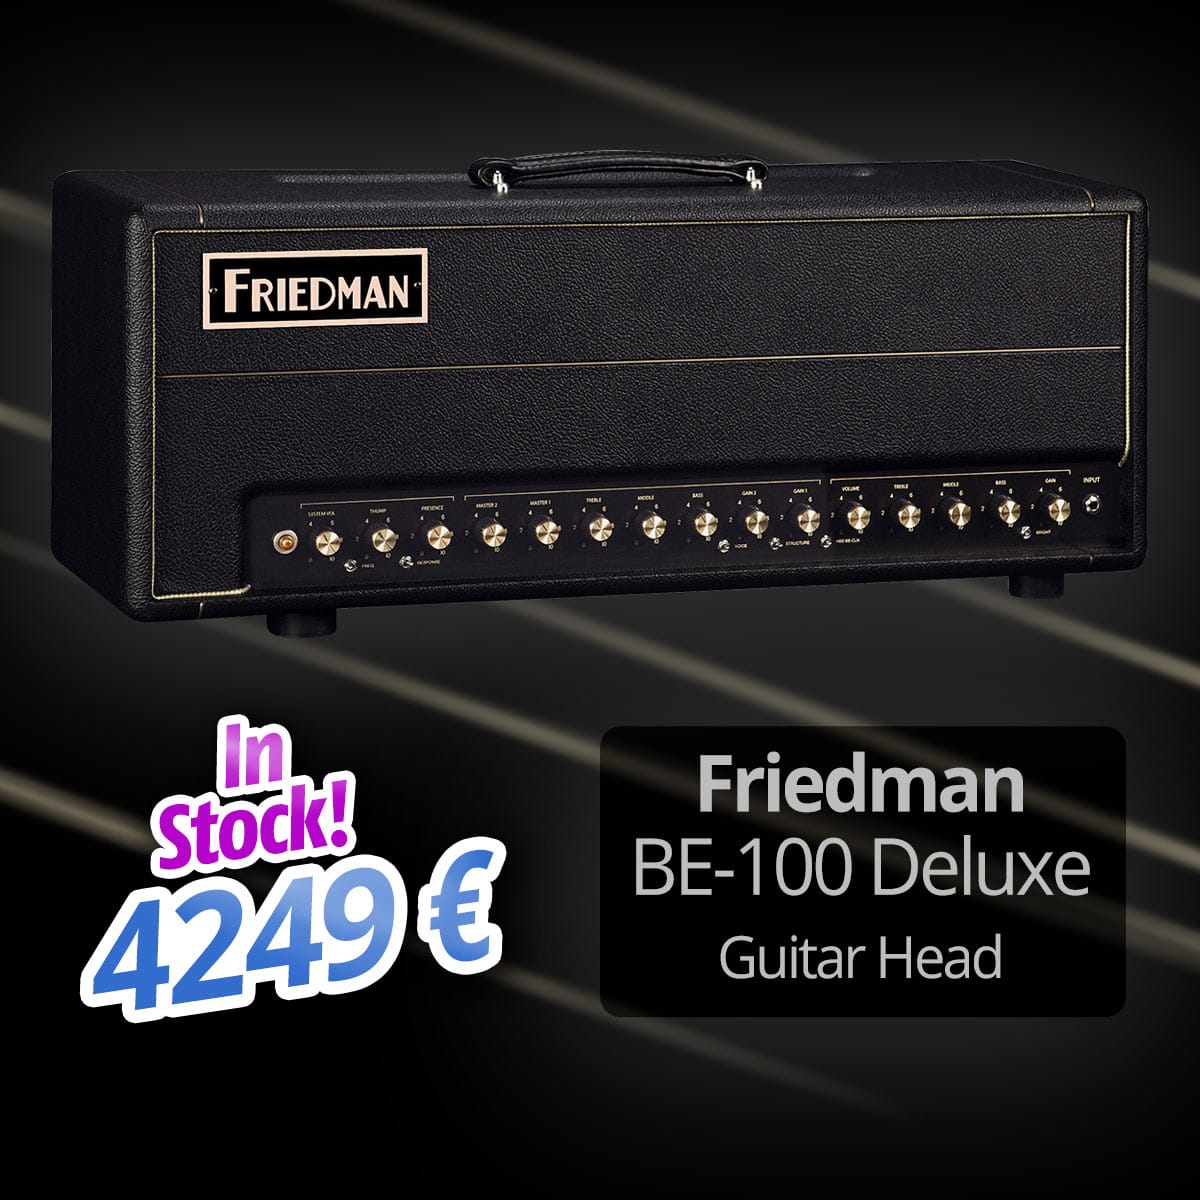 Friedman BE-100 Deluxe Guitar Head - 4249 € - In Stock!